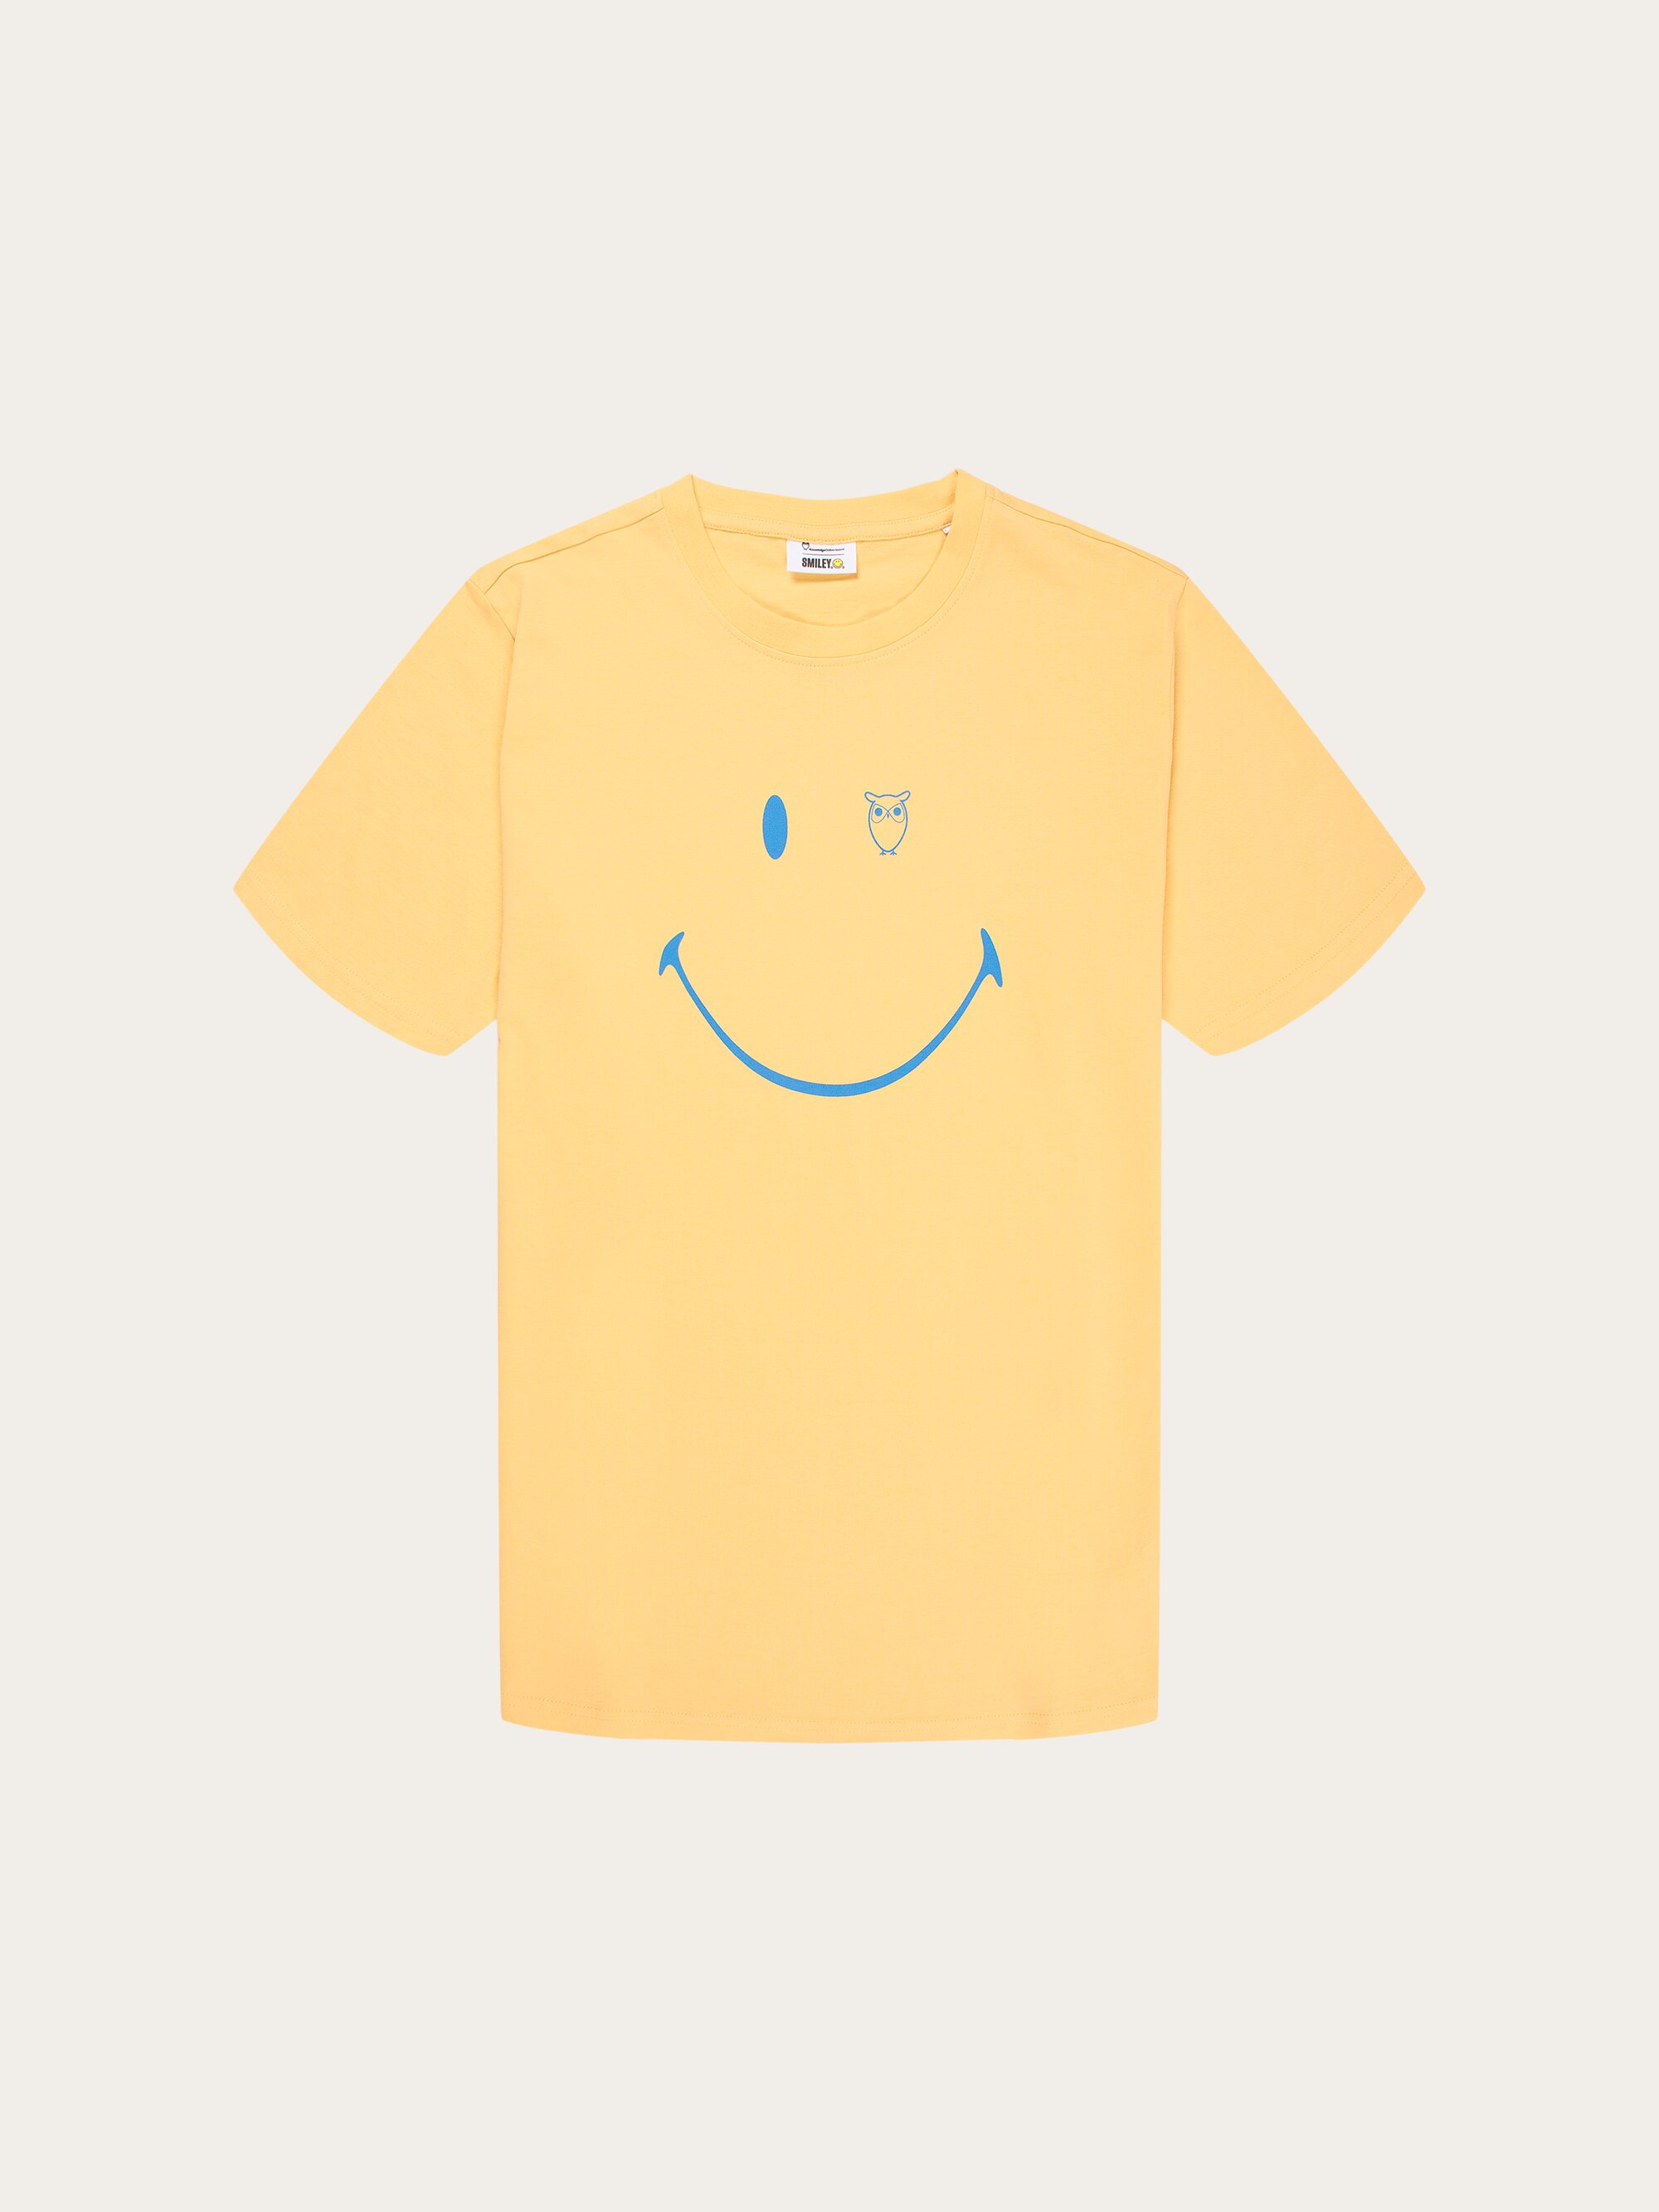 Smiley T-shirt, Impala, L